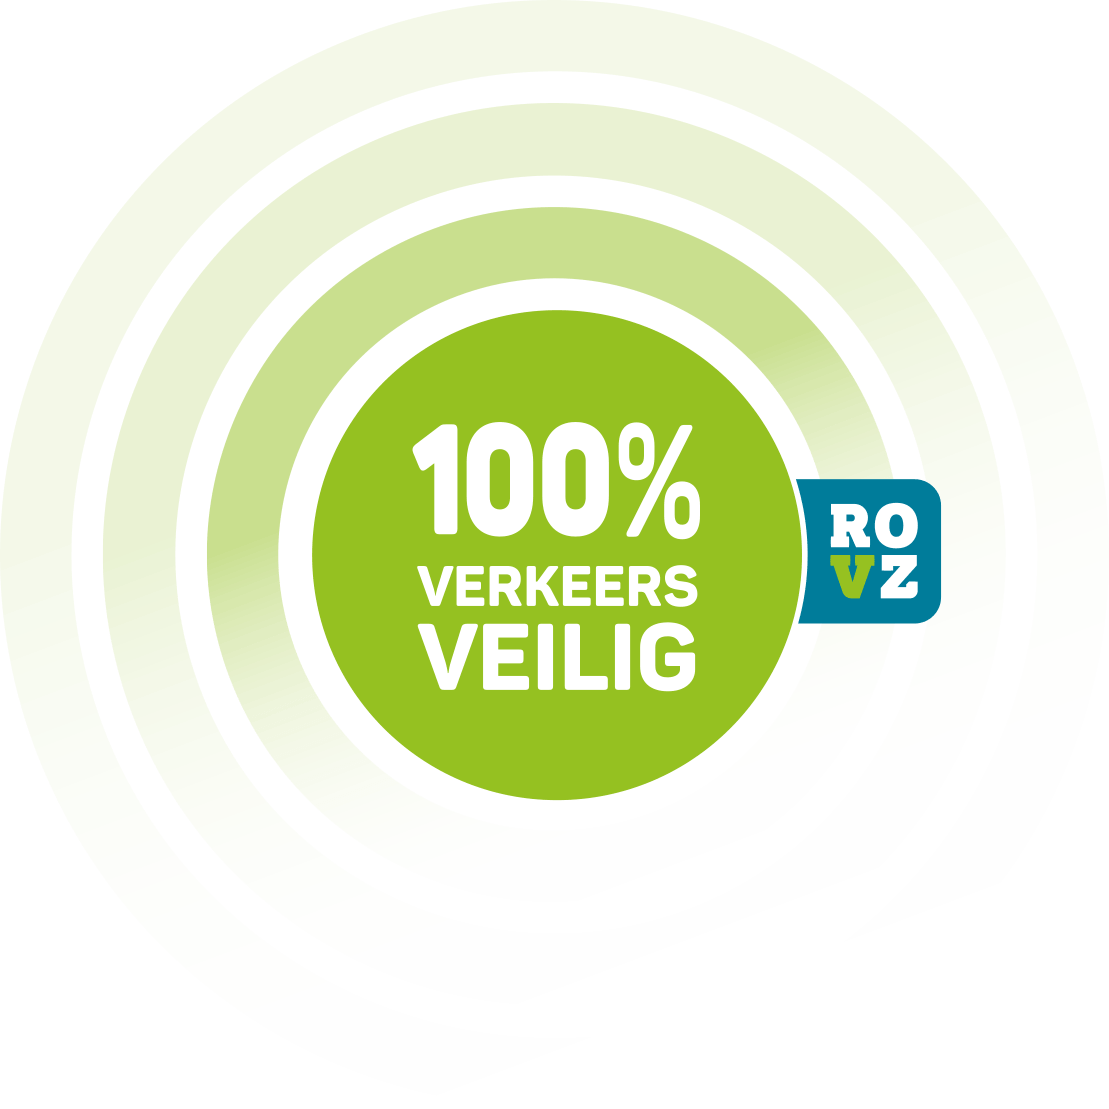 Beeldmerk 100% verkeersveilig met logo ROVZ